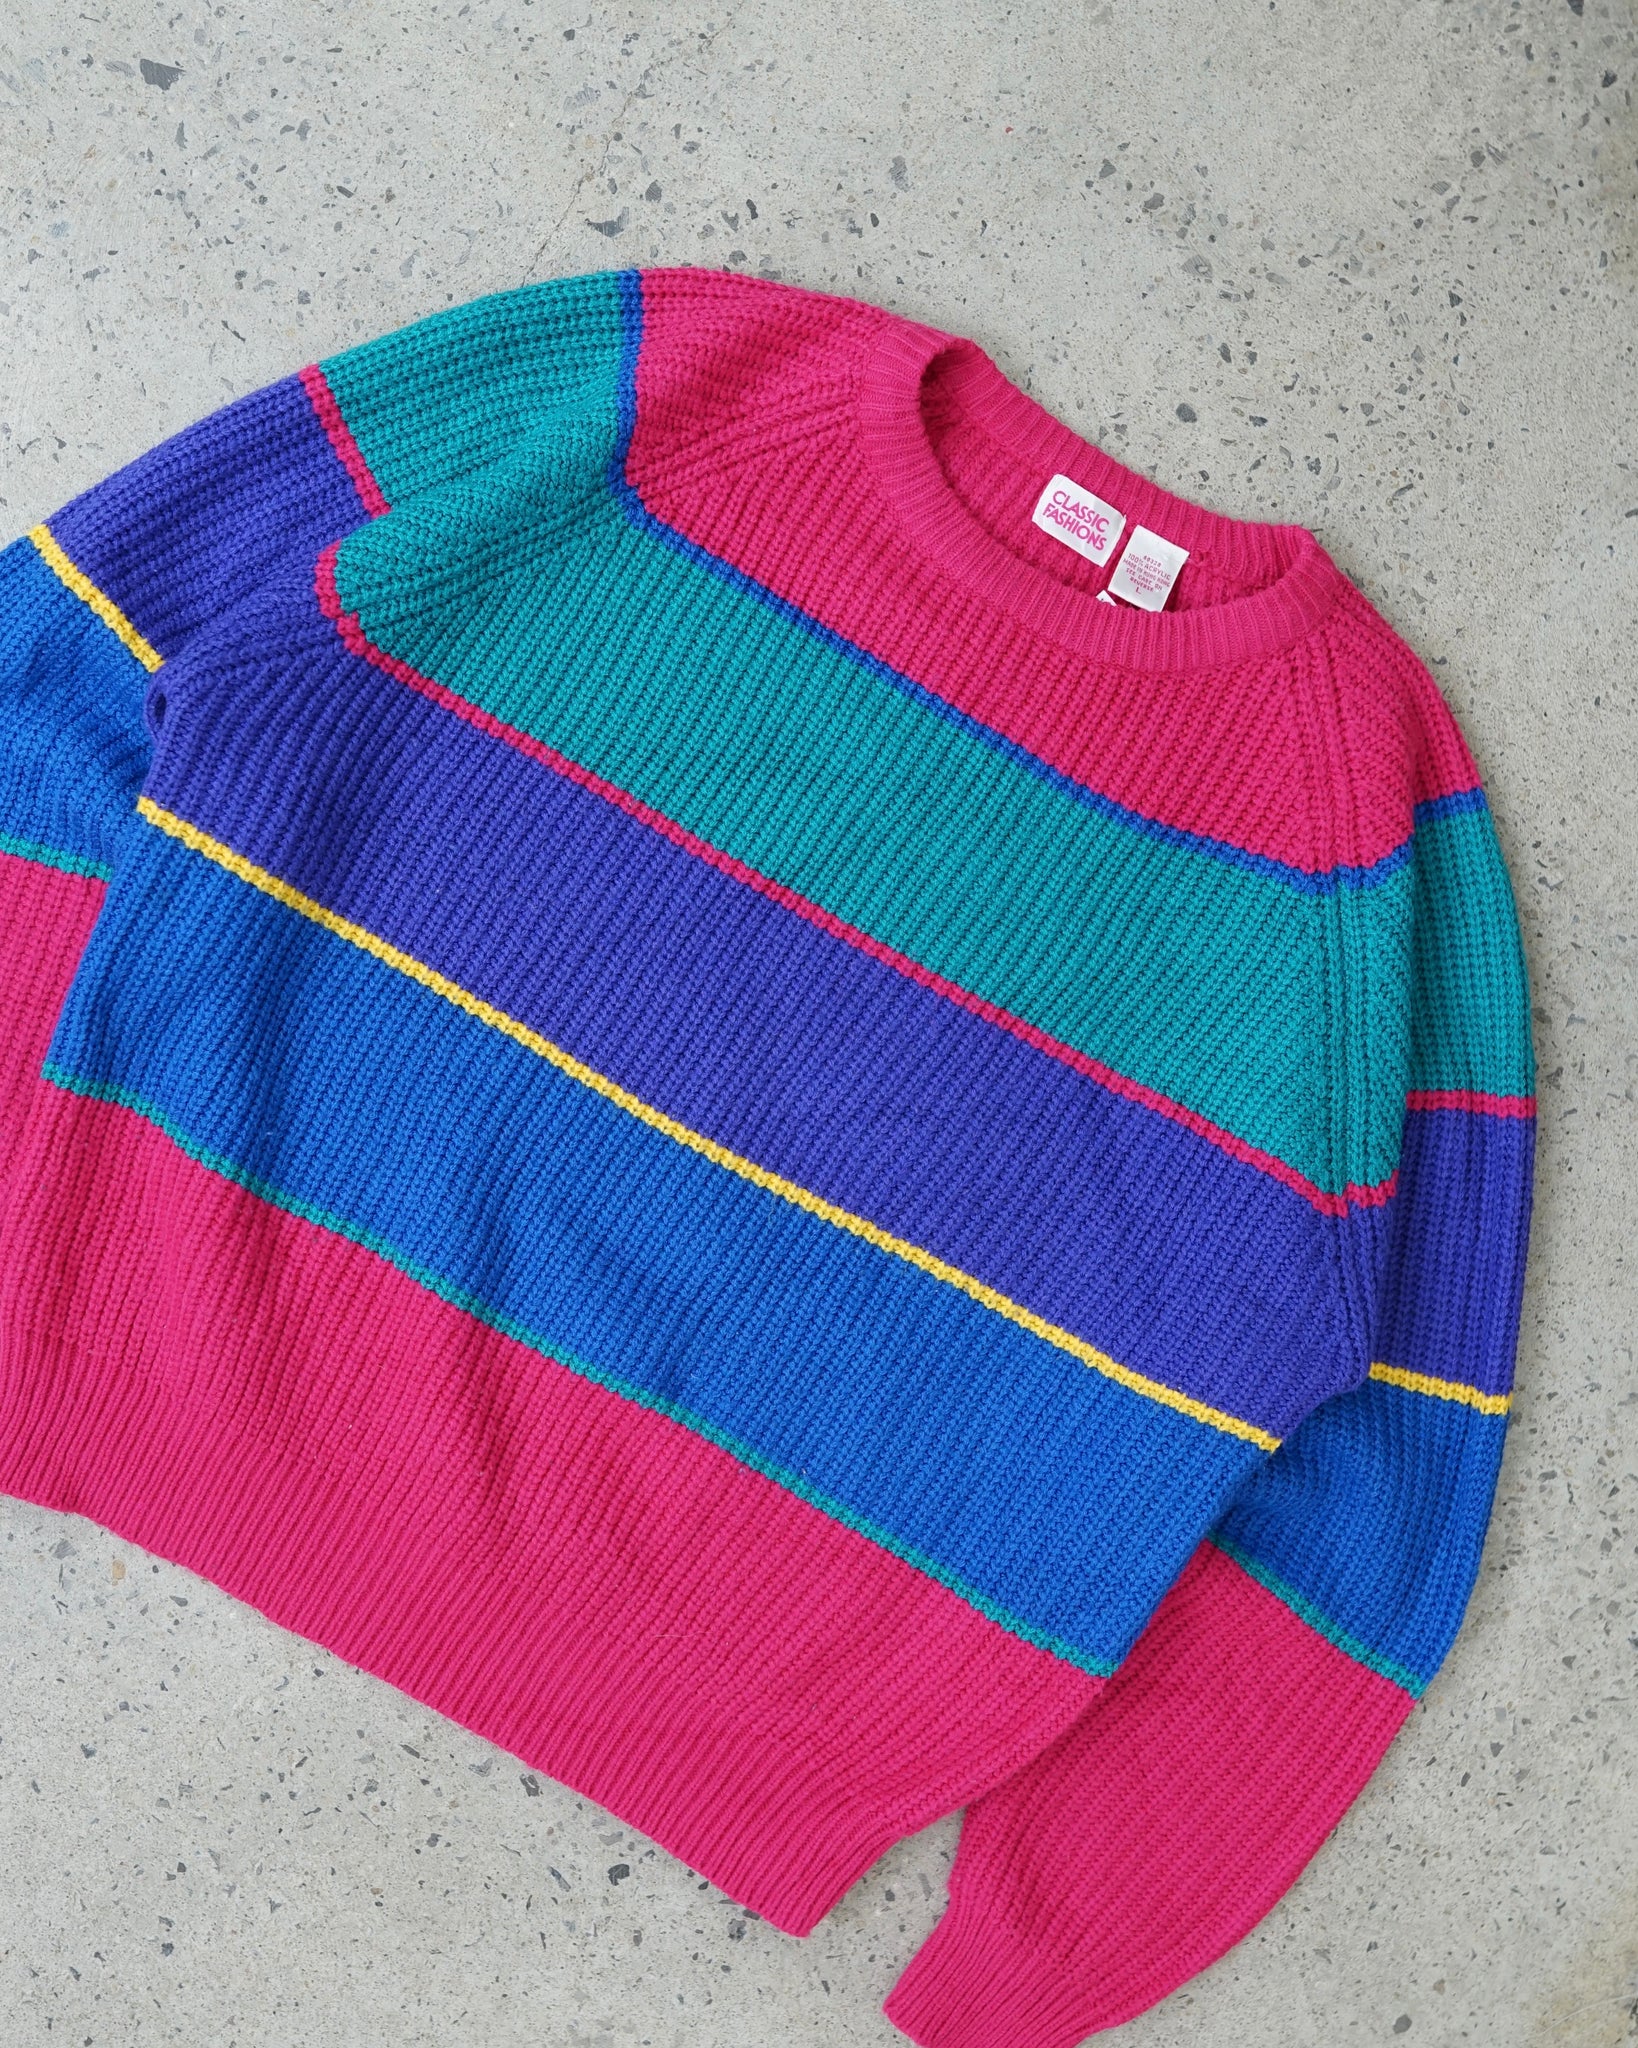 classic fashions knit sweater